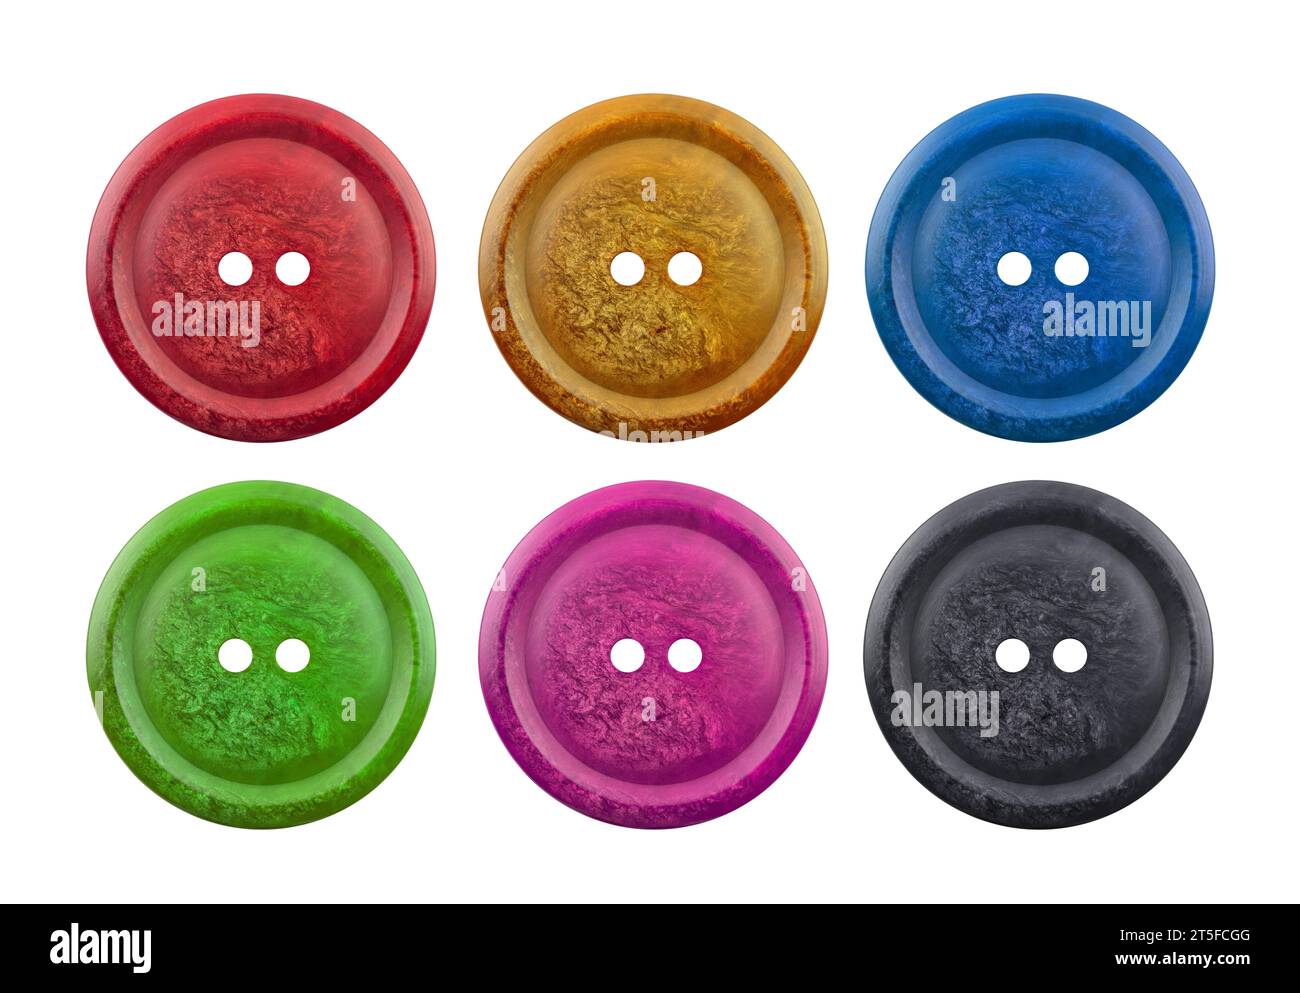 Grupo de botones de ropa de costura coloridos aislados sobre fondo blanco Foto de stock